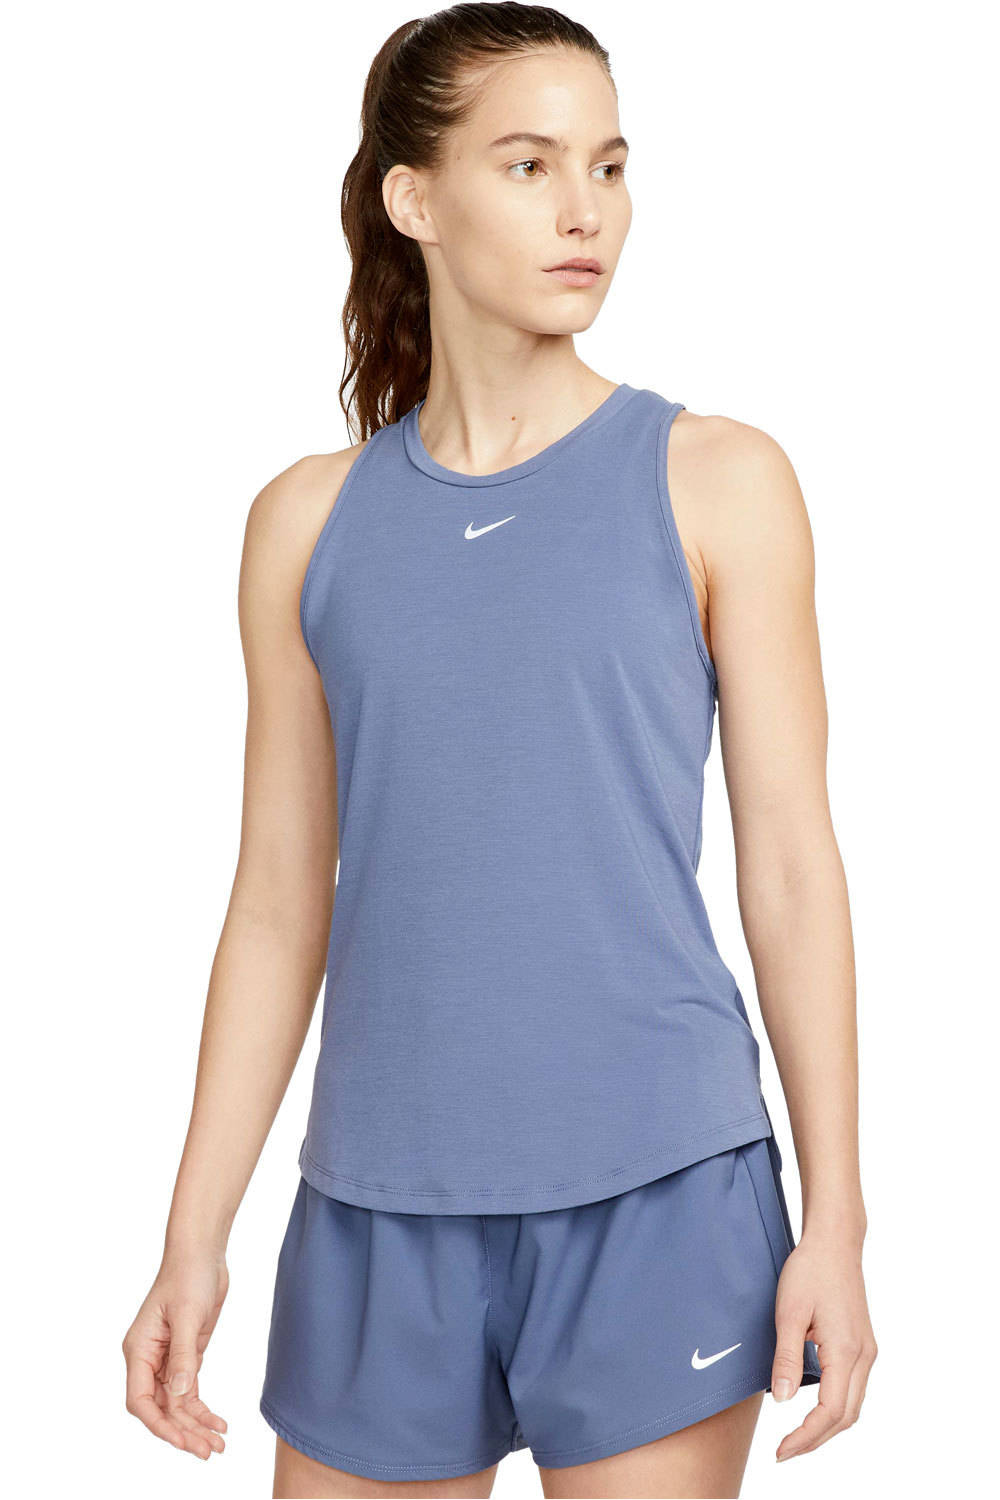 Nike Dri-fit One Luxe azul camisetas tirantes fitness mujer